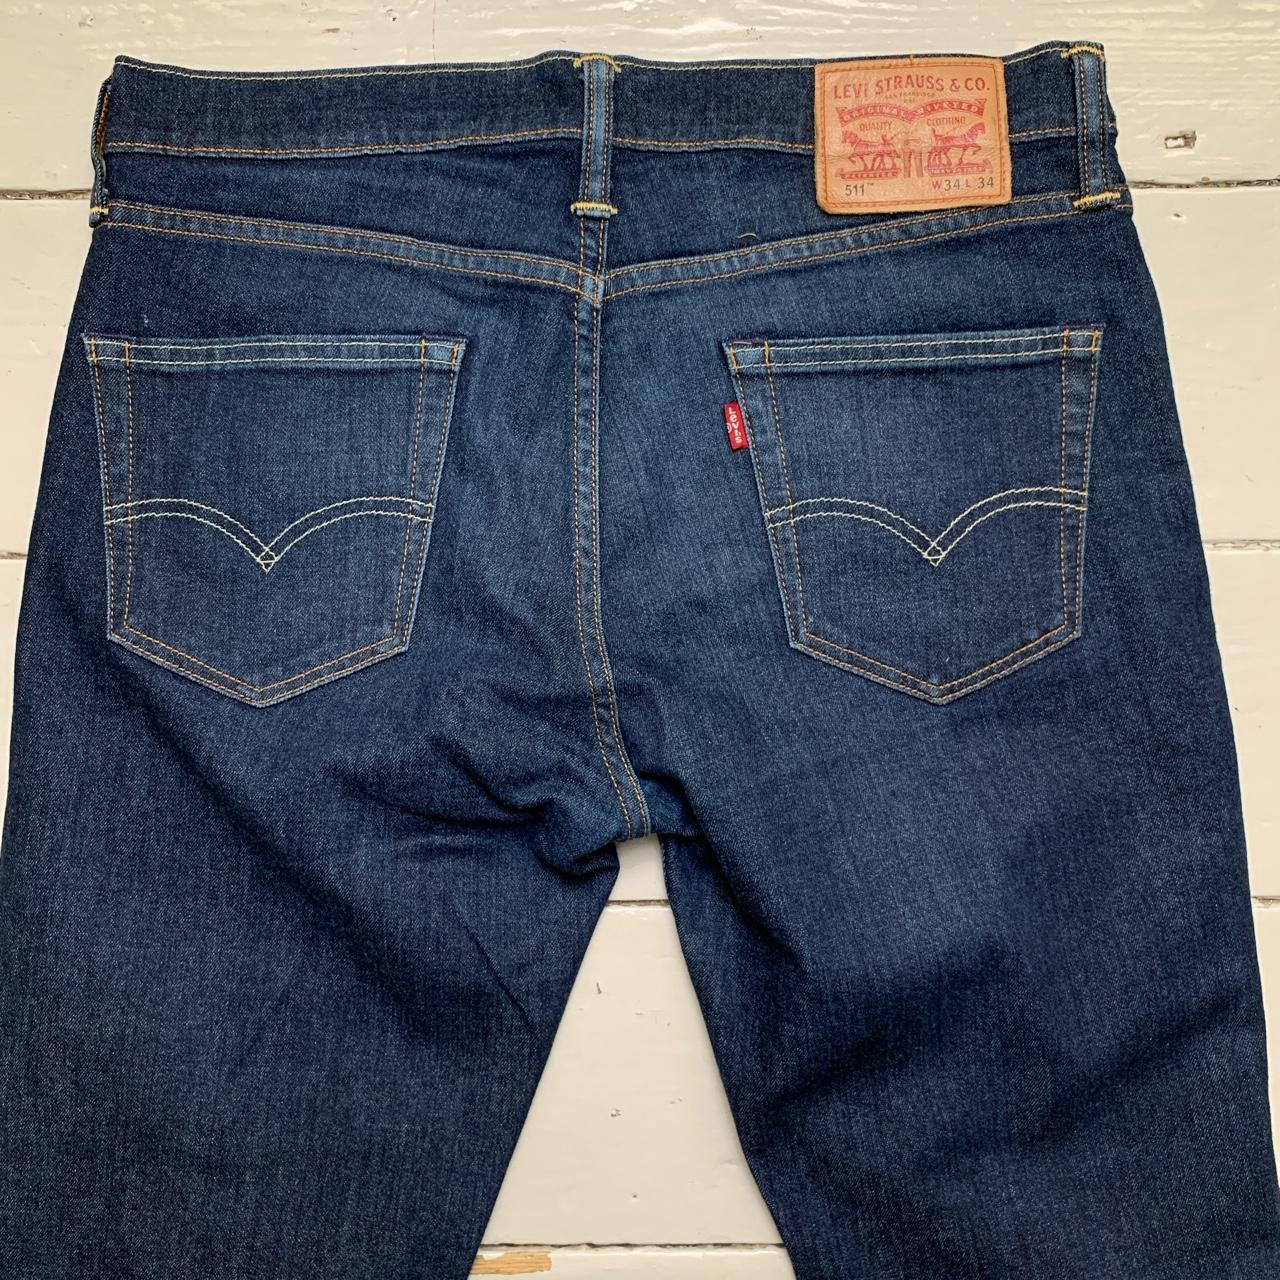 Levis 511 Navy Slim Jeans